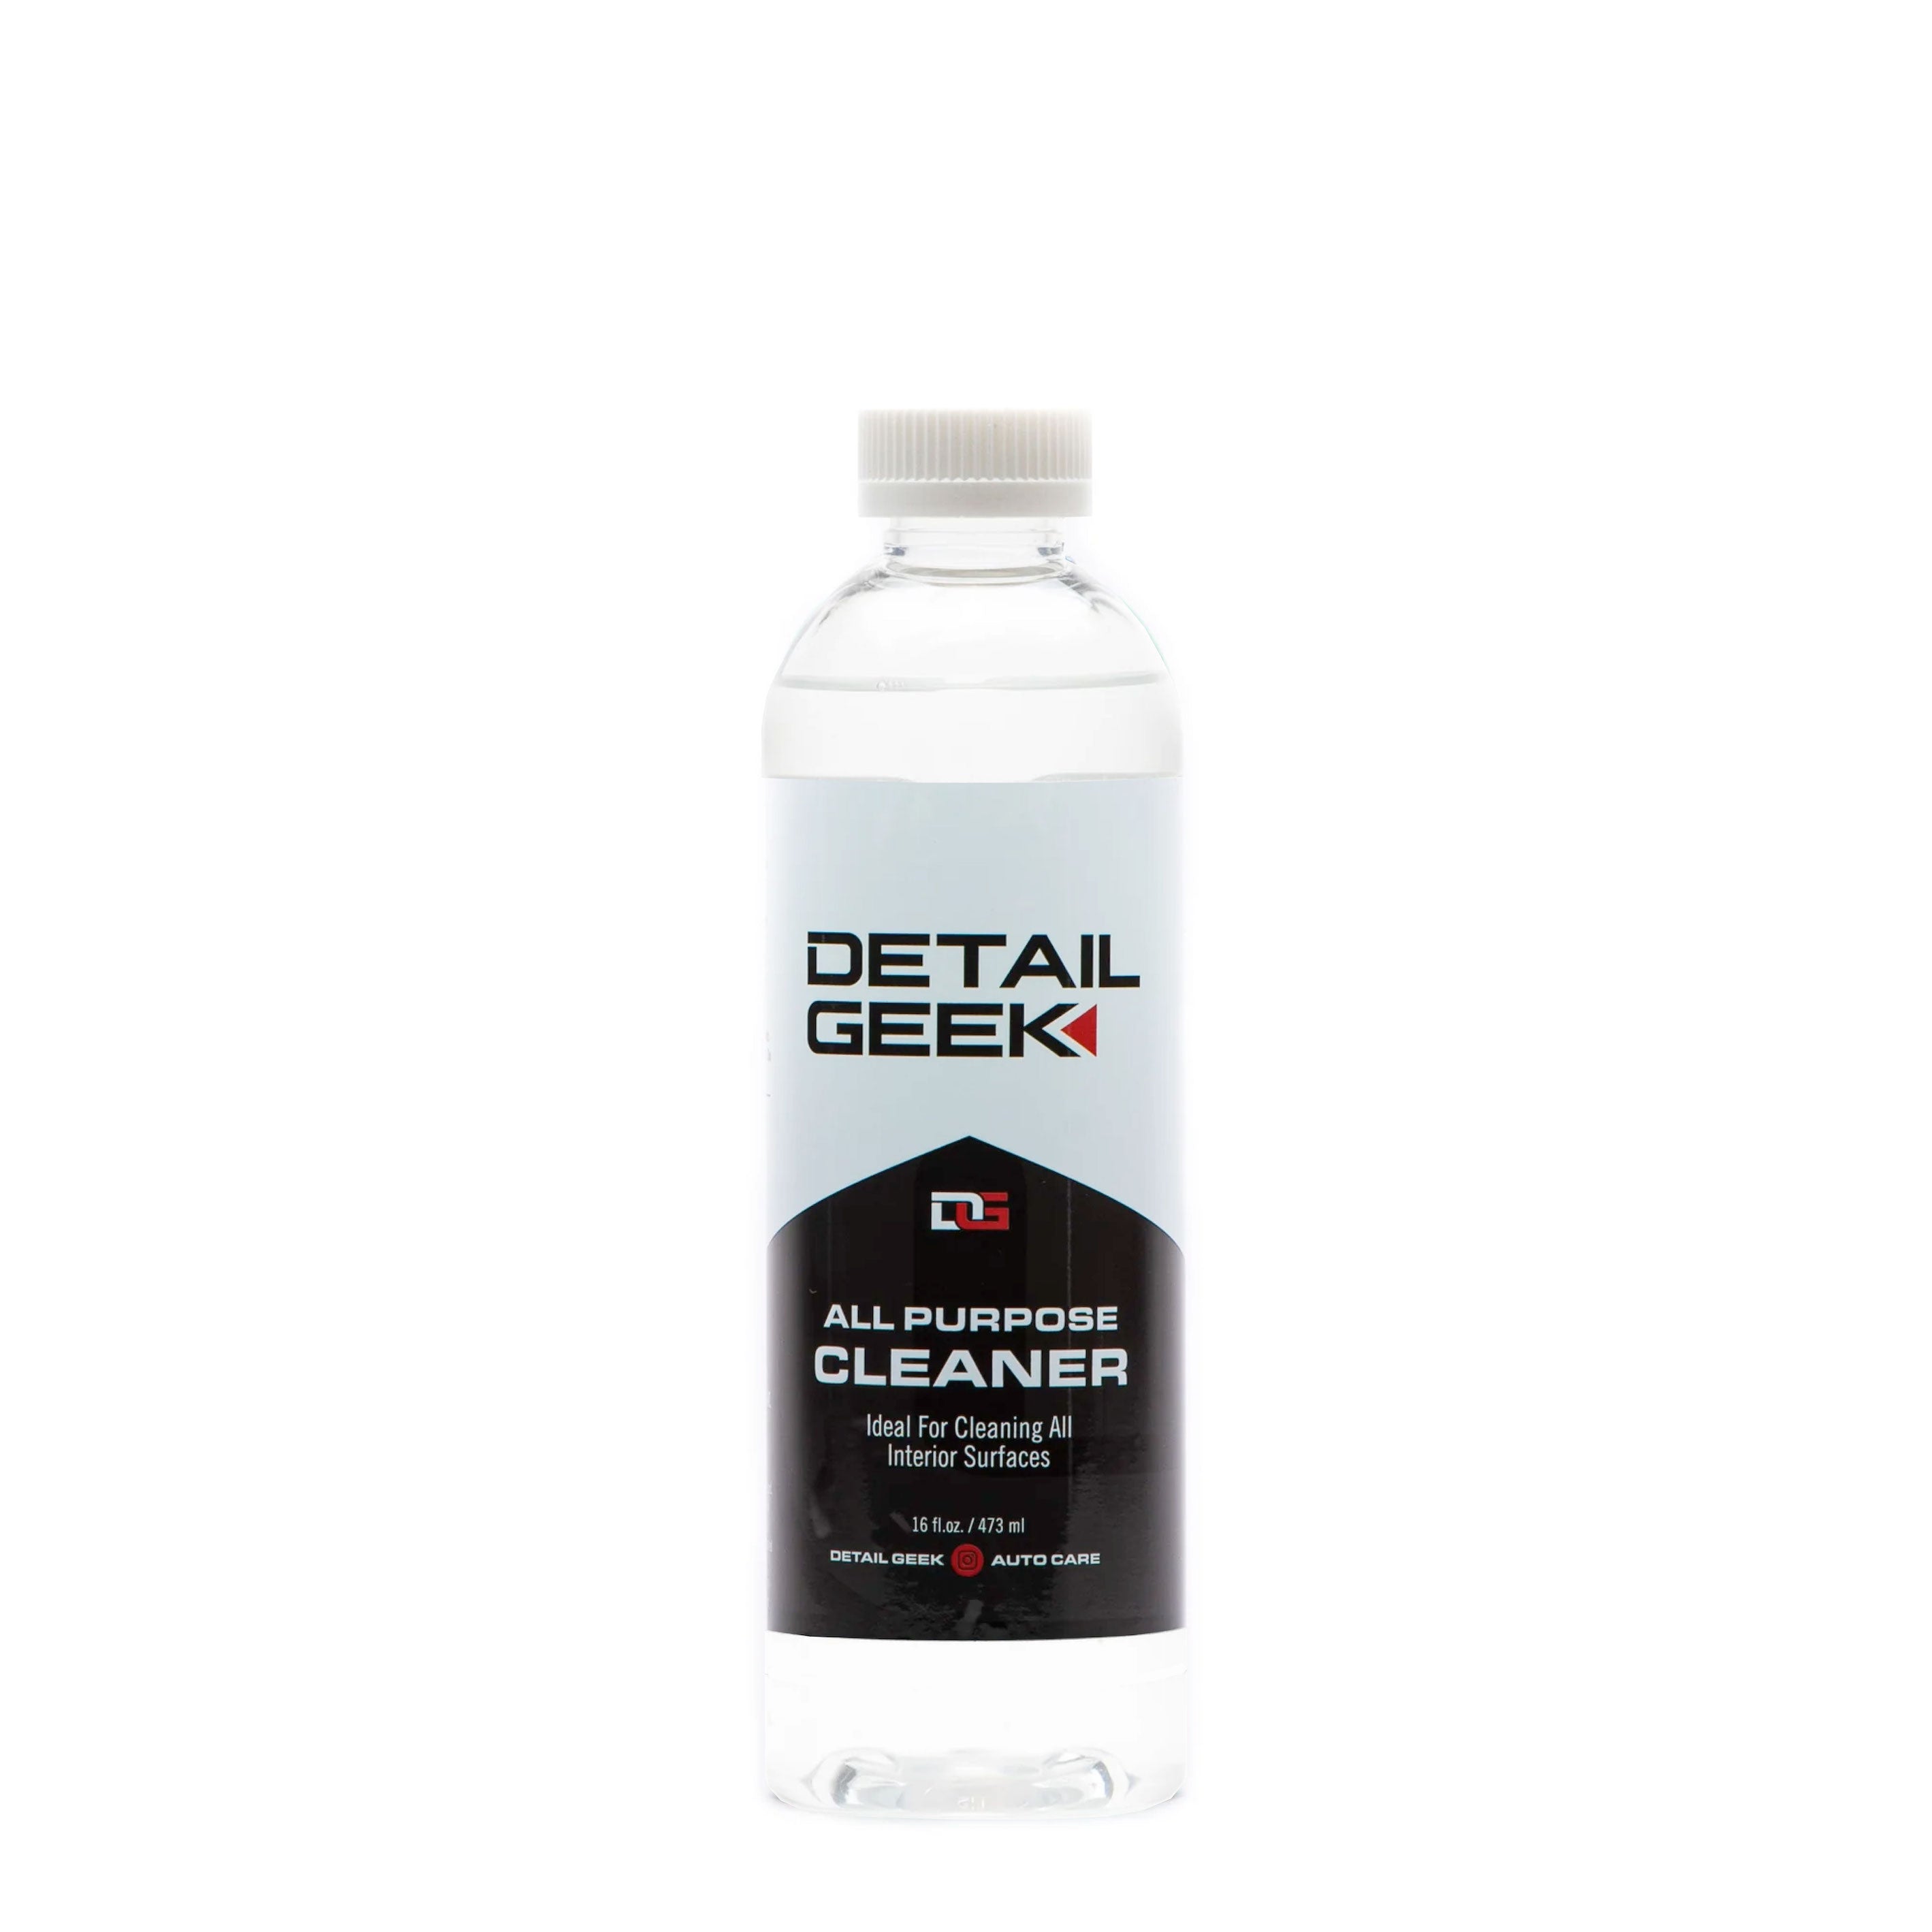 Quick Clean - Quick Detail Spray (32oz) – Patterson Car Care